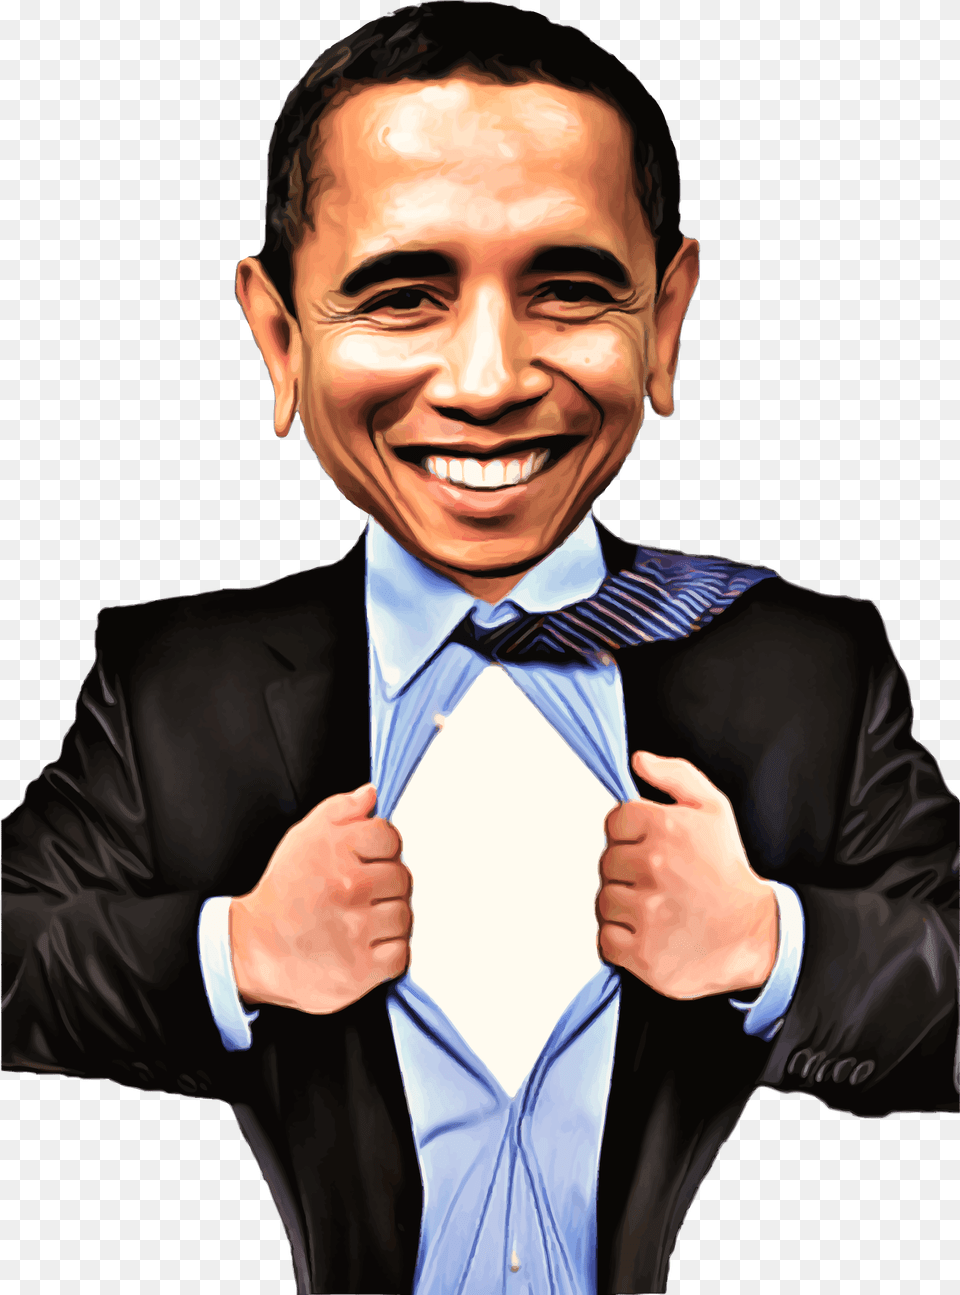 Barack Obama Caricature Clip Arts Barack Obama Cartoon, Accessories, Person, Head, Tie Png